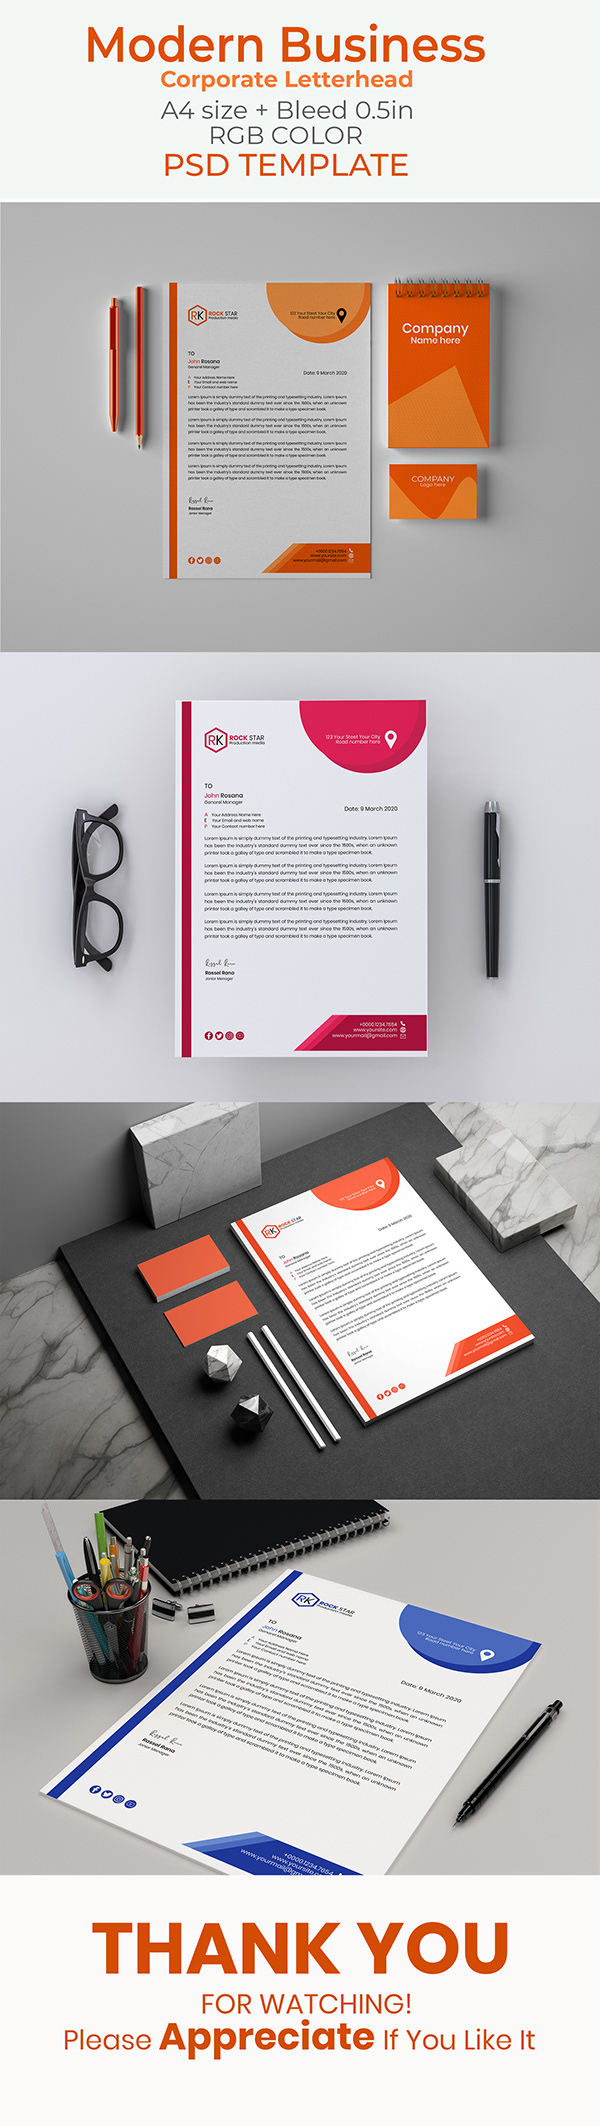 Corporate letter head Design 2020